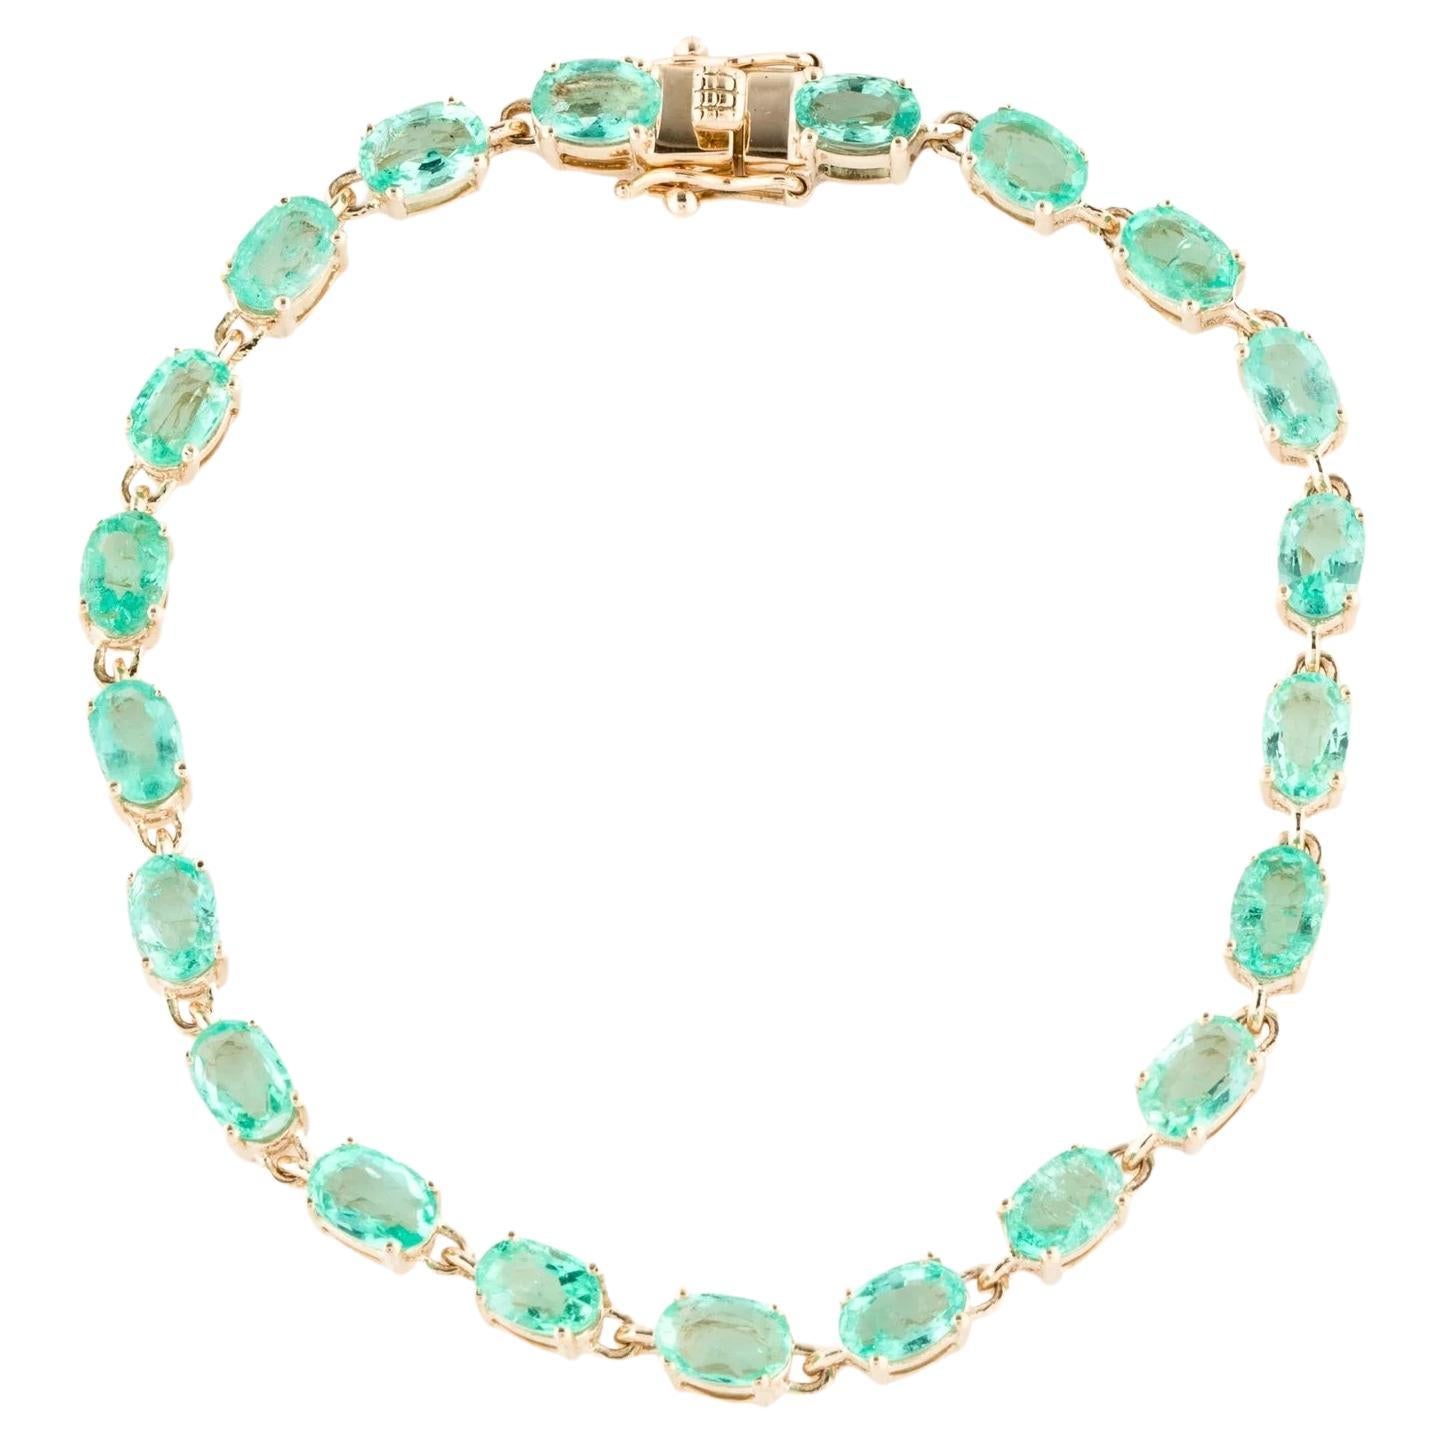 14K 9.62ctw Emerald Link Bracelet - Luxurious Faceted Oval Stones